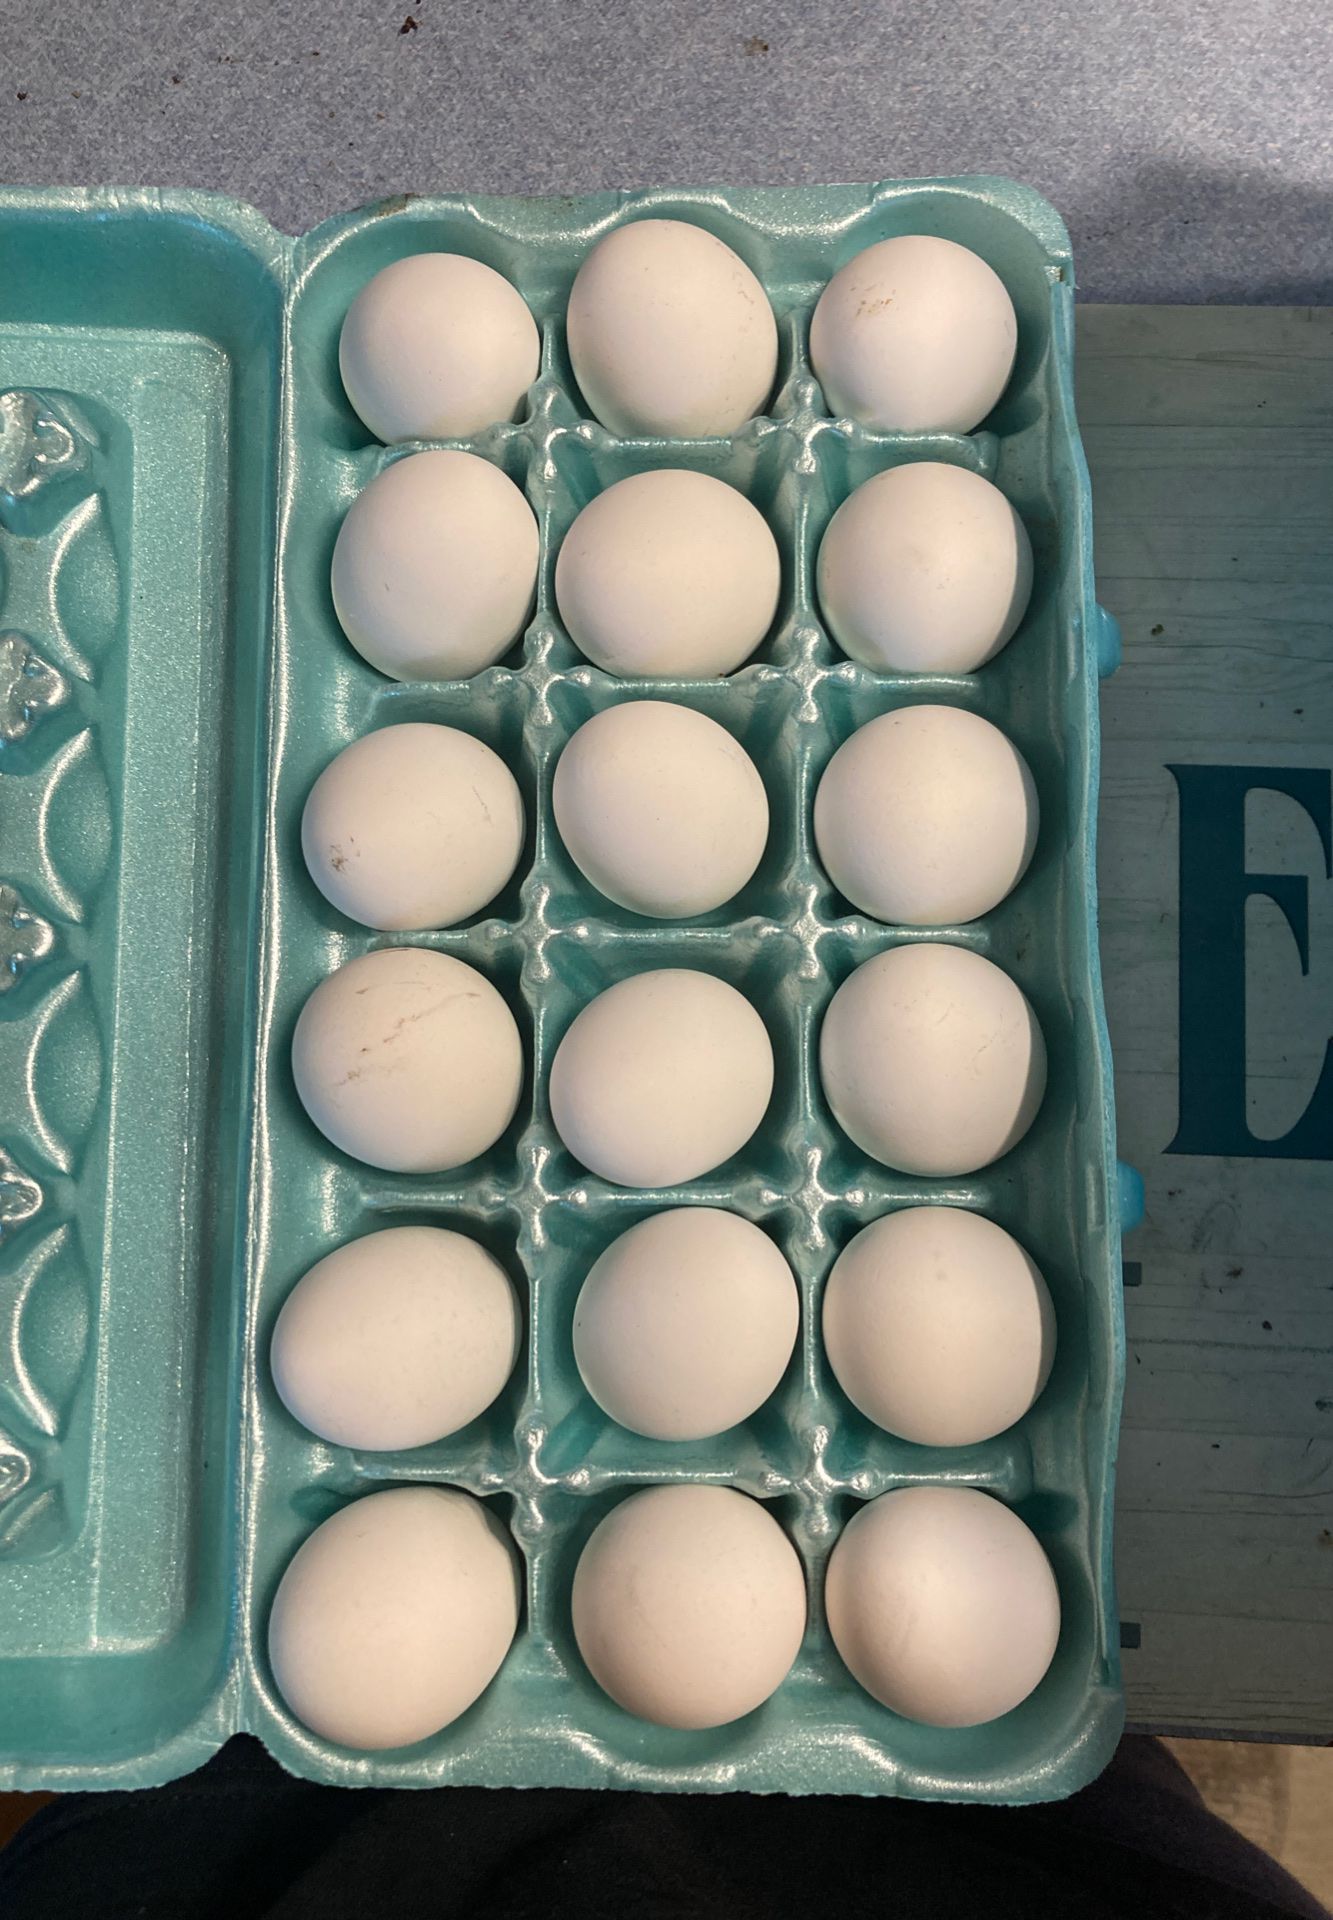 Free-Range farm eggs